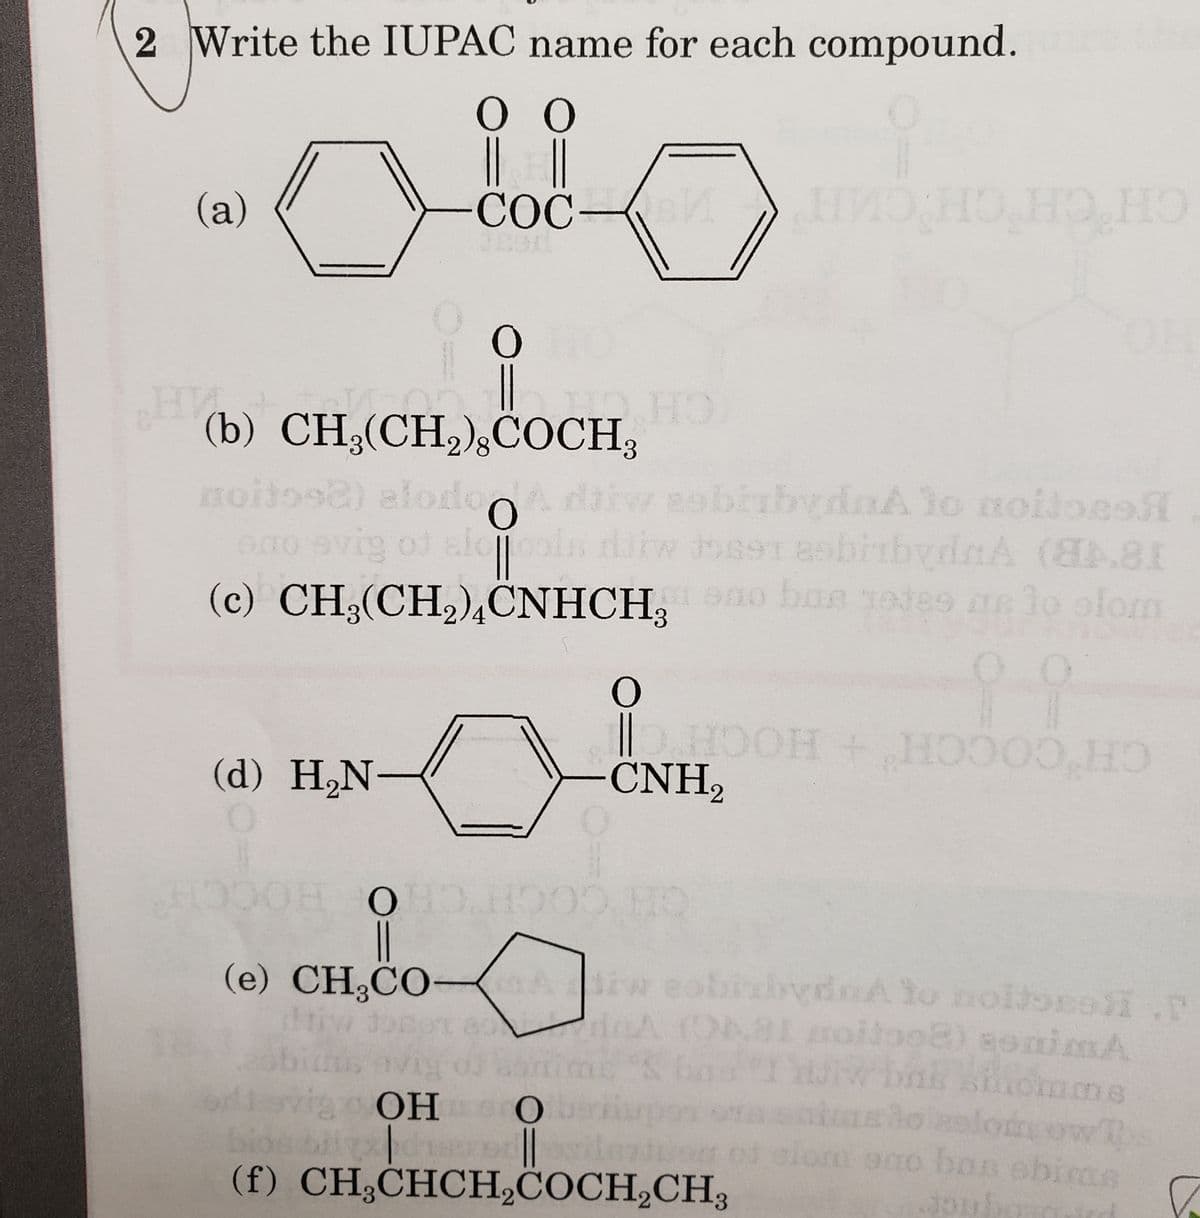 2 Write the IUPAC name for each compound.
Ο
COC-M
(a)
HV
Ο
0
||
(d) H₂N-
C
(b) CH₂(CH₂),COCH,
OTT HO
noitos2) alodo d
diw sobirbydaA to noilo
ono evig of alcools dikw 39891 abitbydA (8.81
(c) CH₂(CH₂)4CNHCH, no bae totes me to slom
0
O
CNH₂
با
нио но но но
HOOH + HOOO HO
HOOOH OHO.HOOD HO
||
(e) CH₂CO-A iw sobixbydnA to noltoso.
driw do
A (D681 moitoo@) aoniMA
"I w bn shomme
a onions to solomeowths
of elom ono bas shima
Joubo
aviy oj
vig OH
OHO bertiup
bios biydisororesidenten
(f) CH3CHCH₂COCH₂CH3